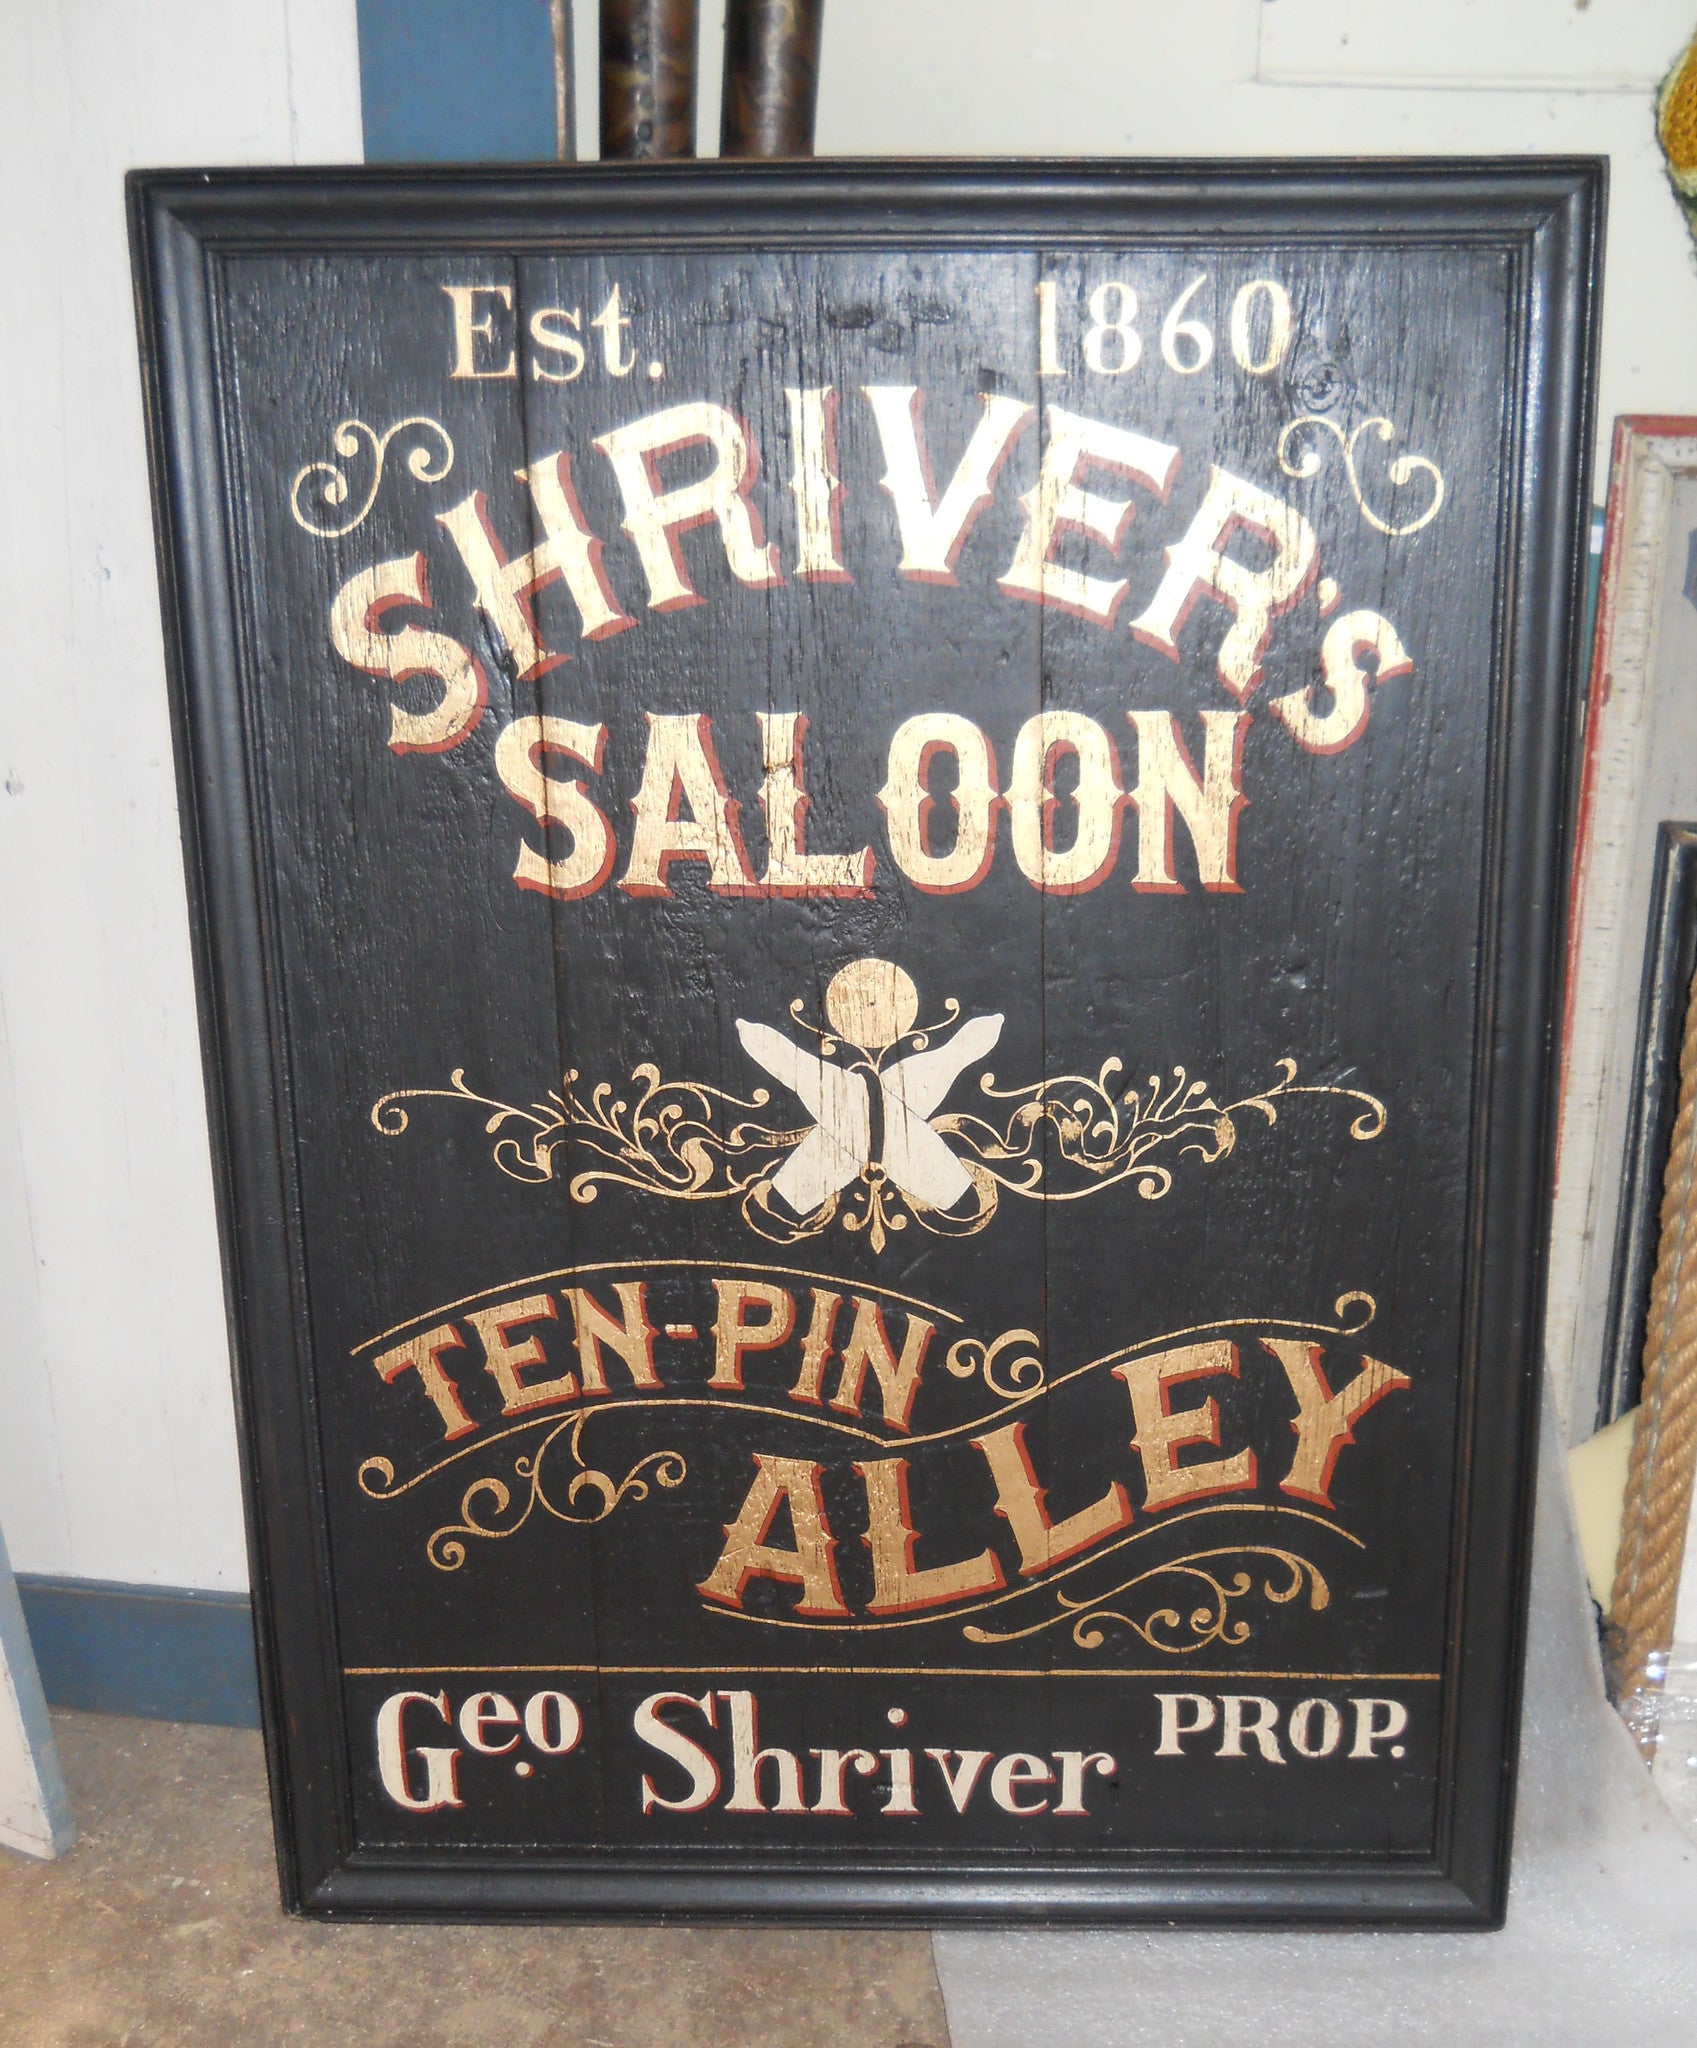 Shriver's Saloon